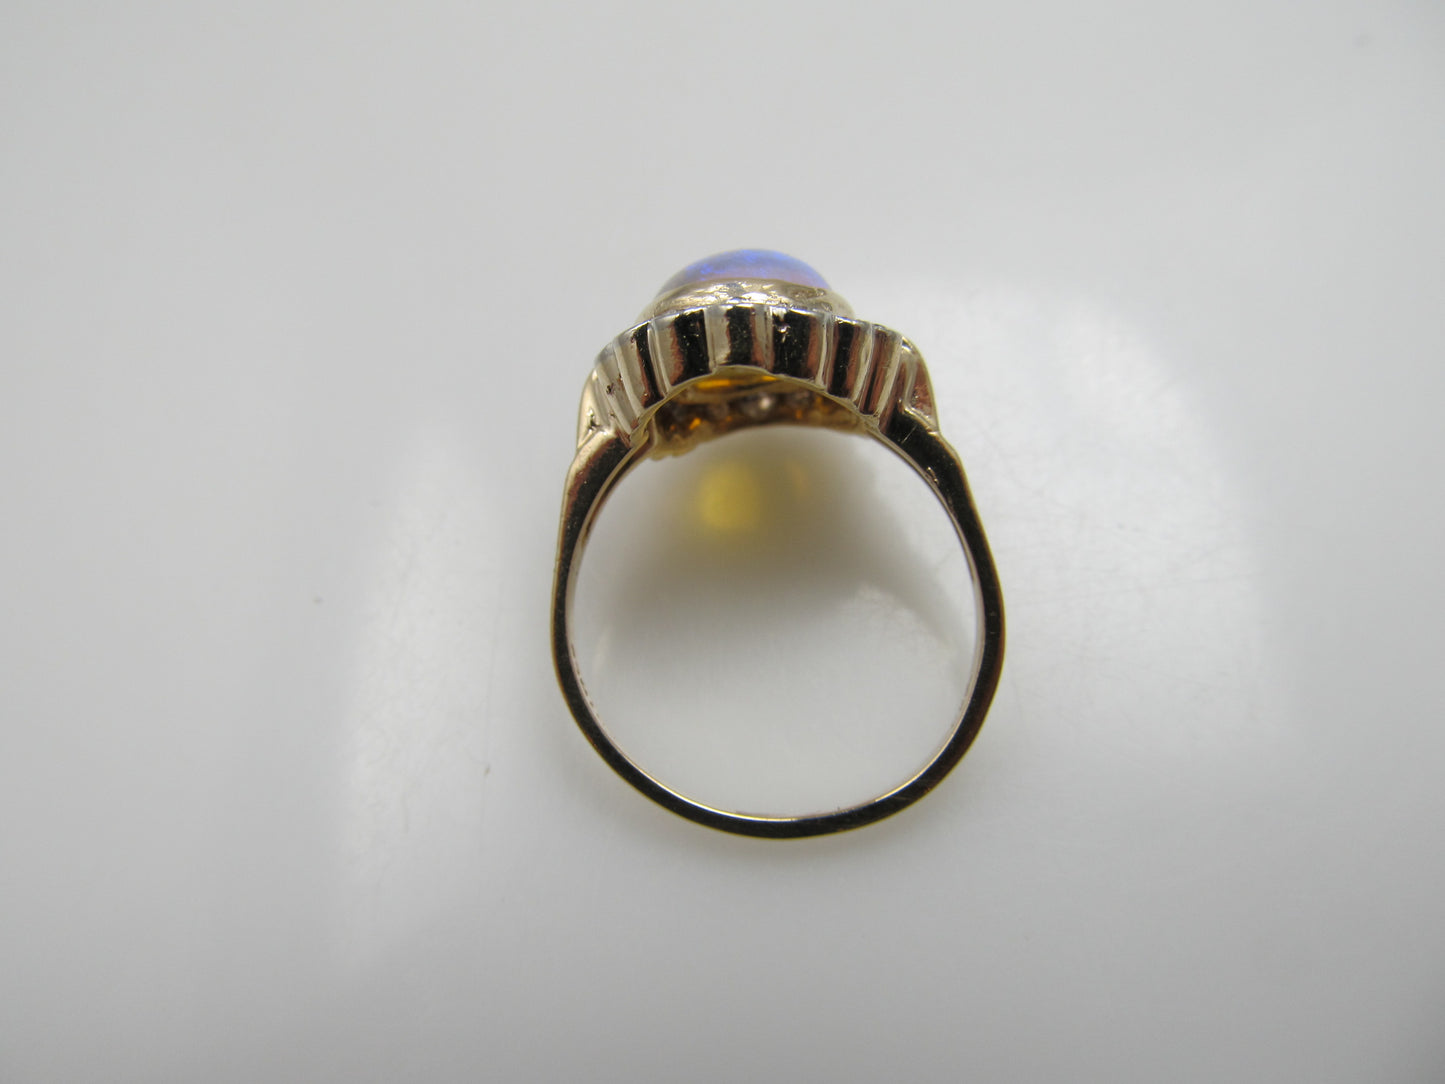 Vintage 2ct opal and diamond ring, circa 1930